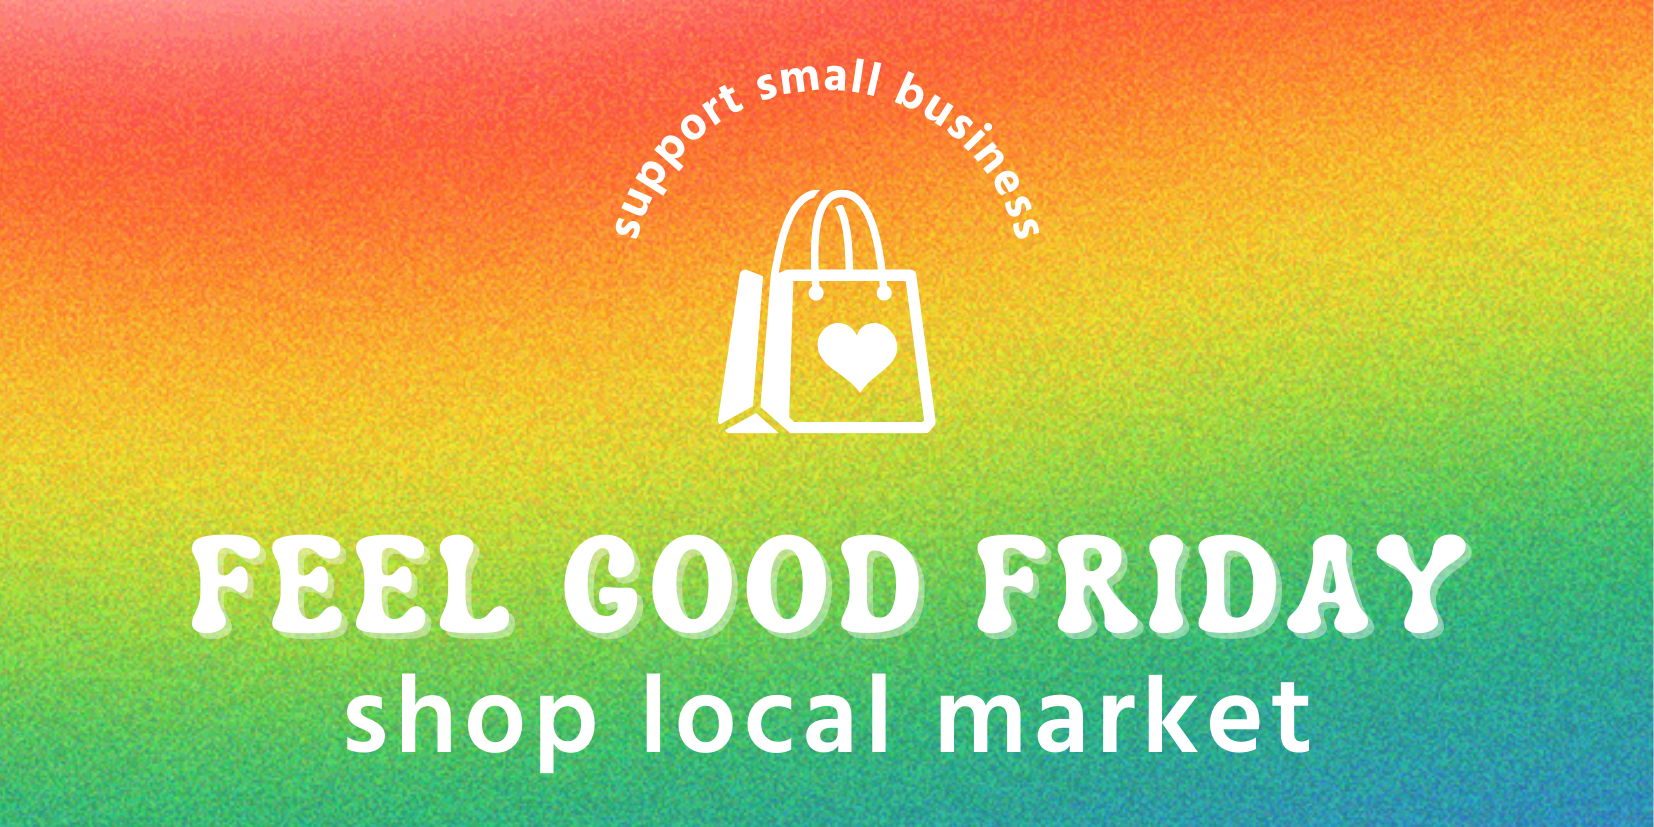 Feel Good Friday Shop Local Market promotional image